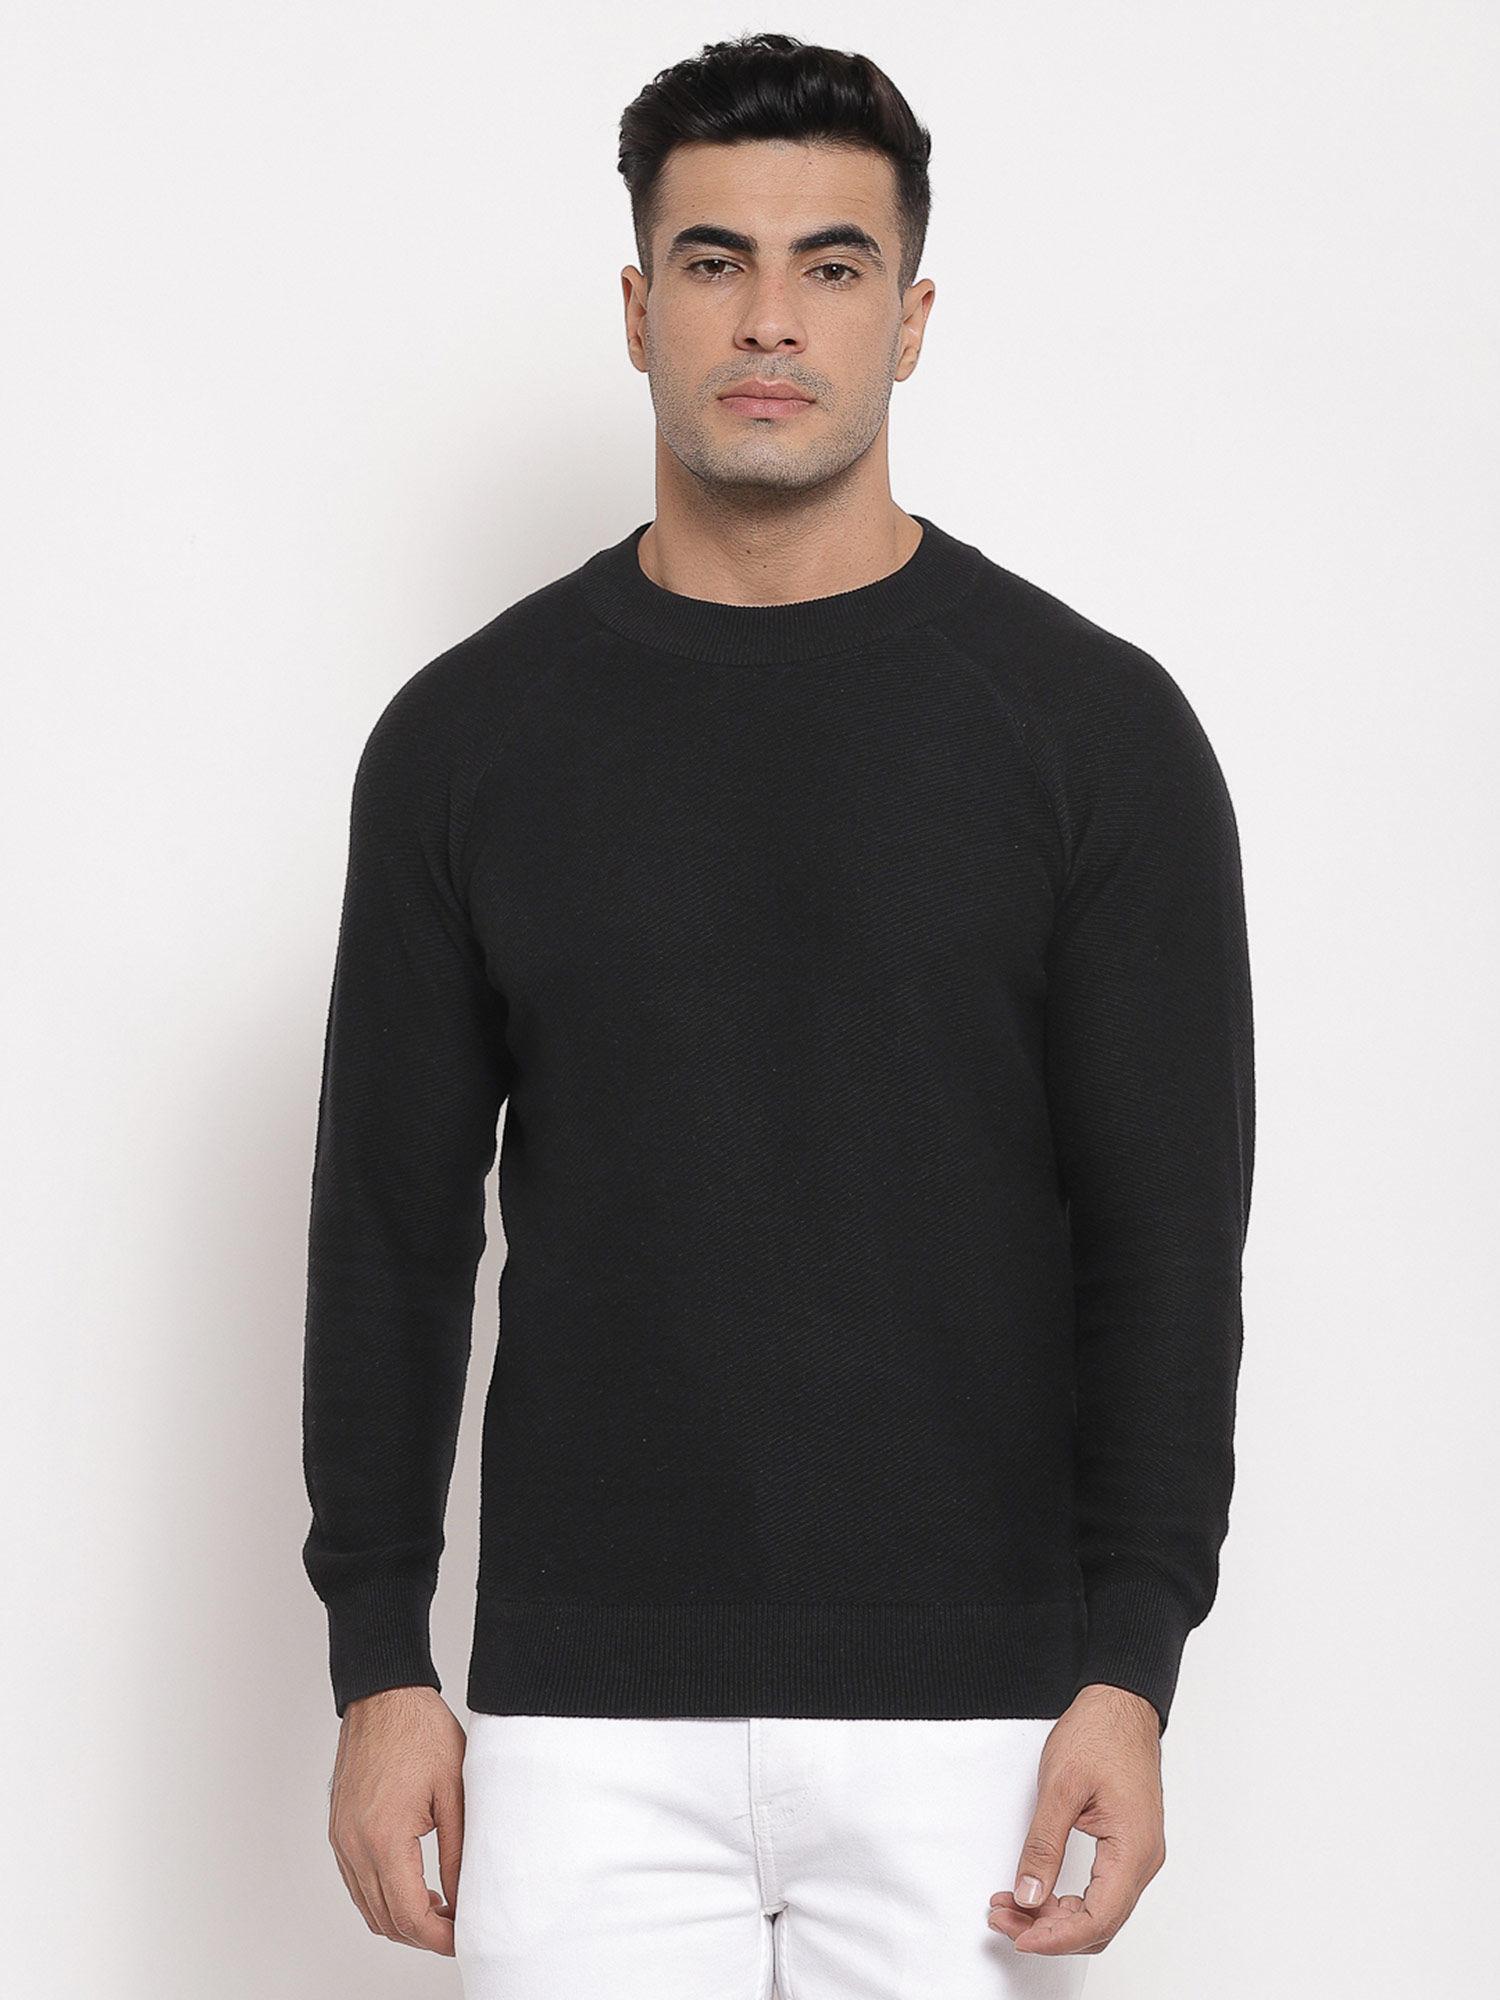 mens black sweater